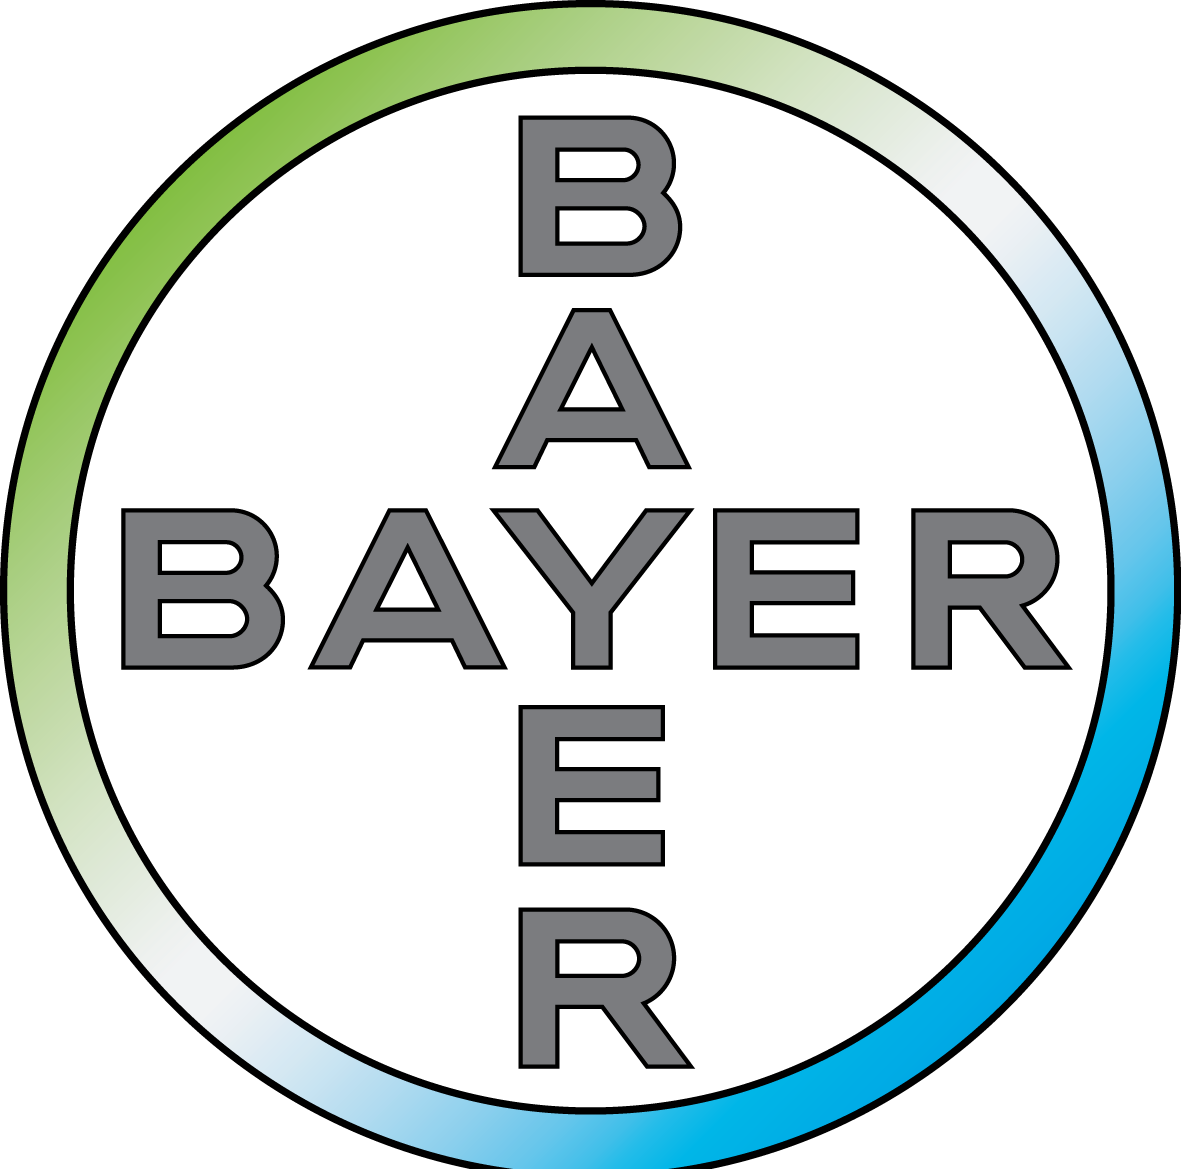  Логотип Bayer - компании из списка DAX 